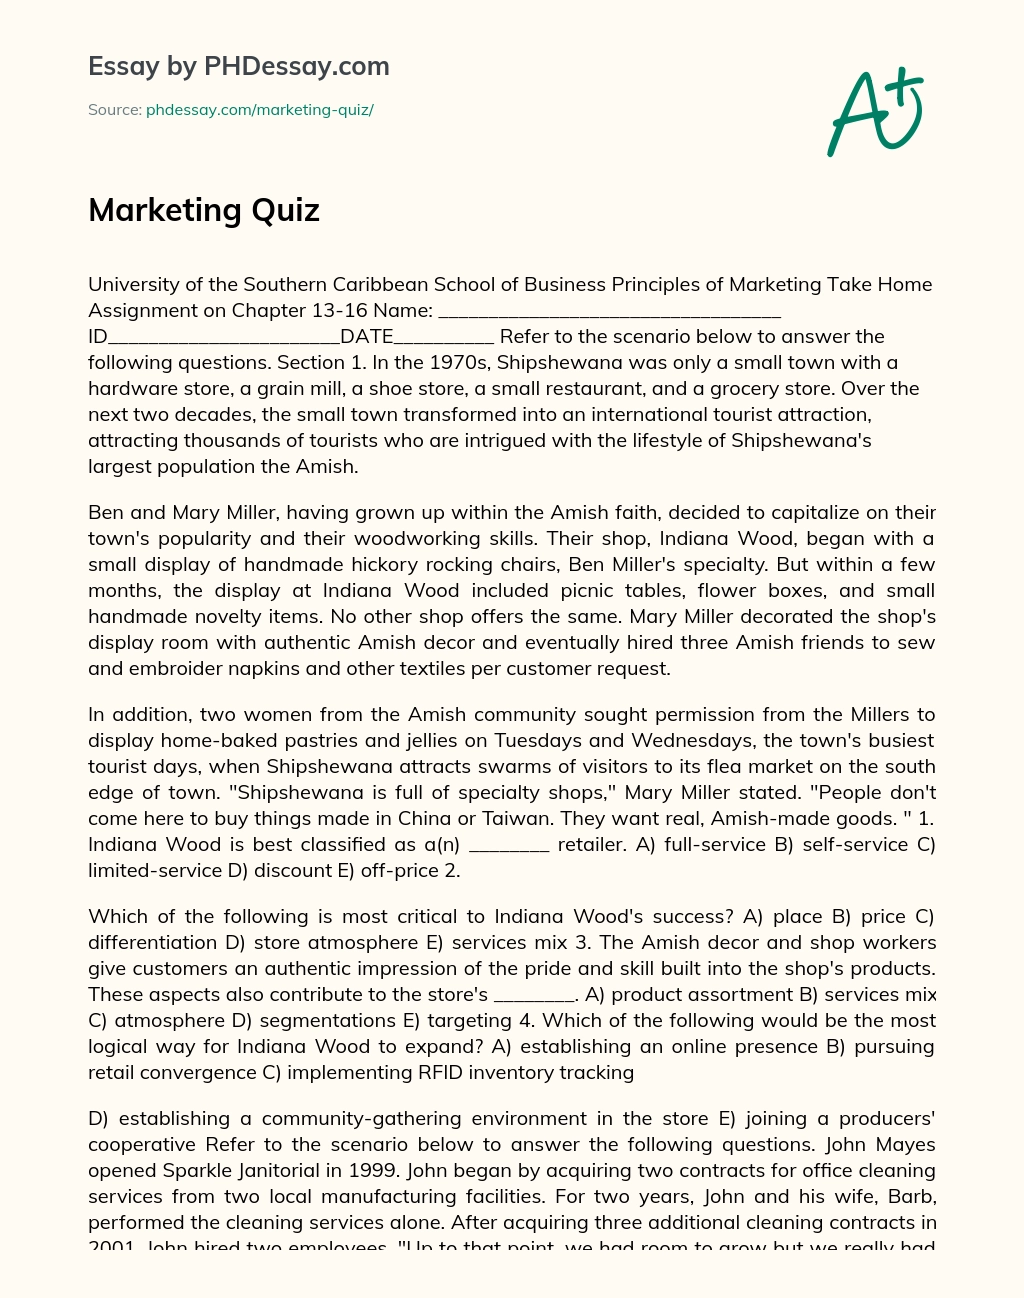 Marketing Quiz essay